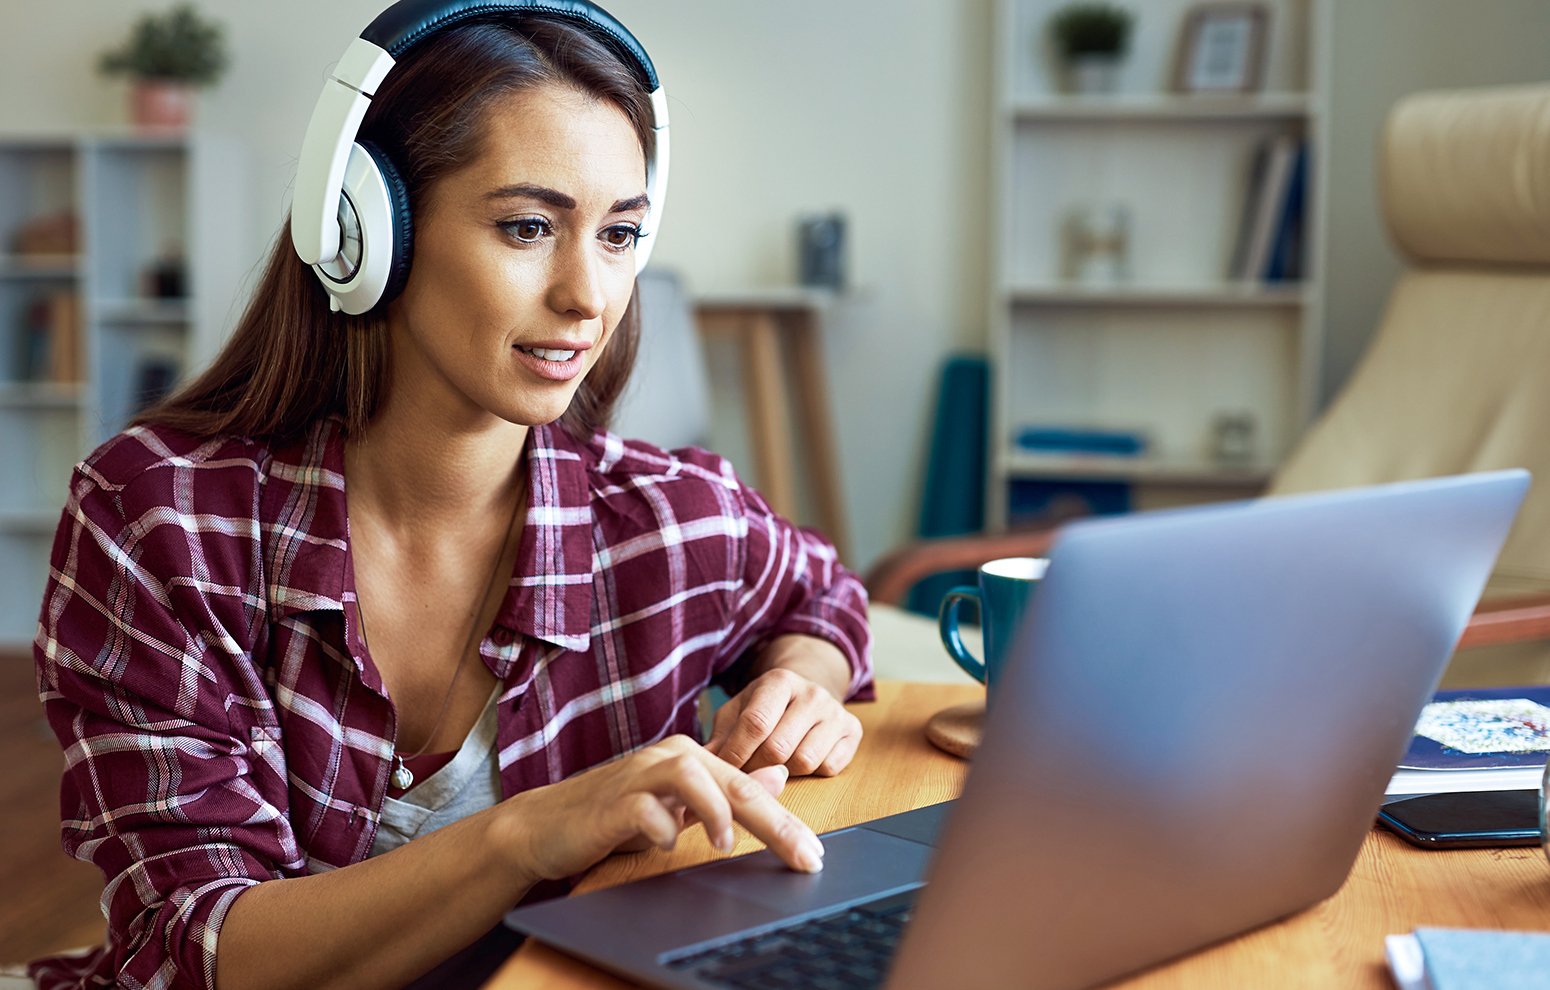 Woman wearing headphones using computer.